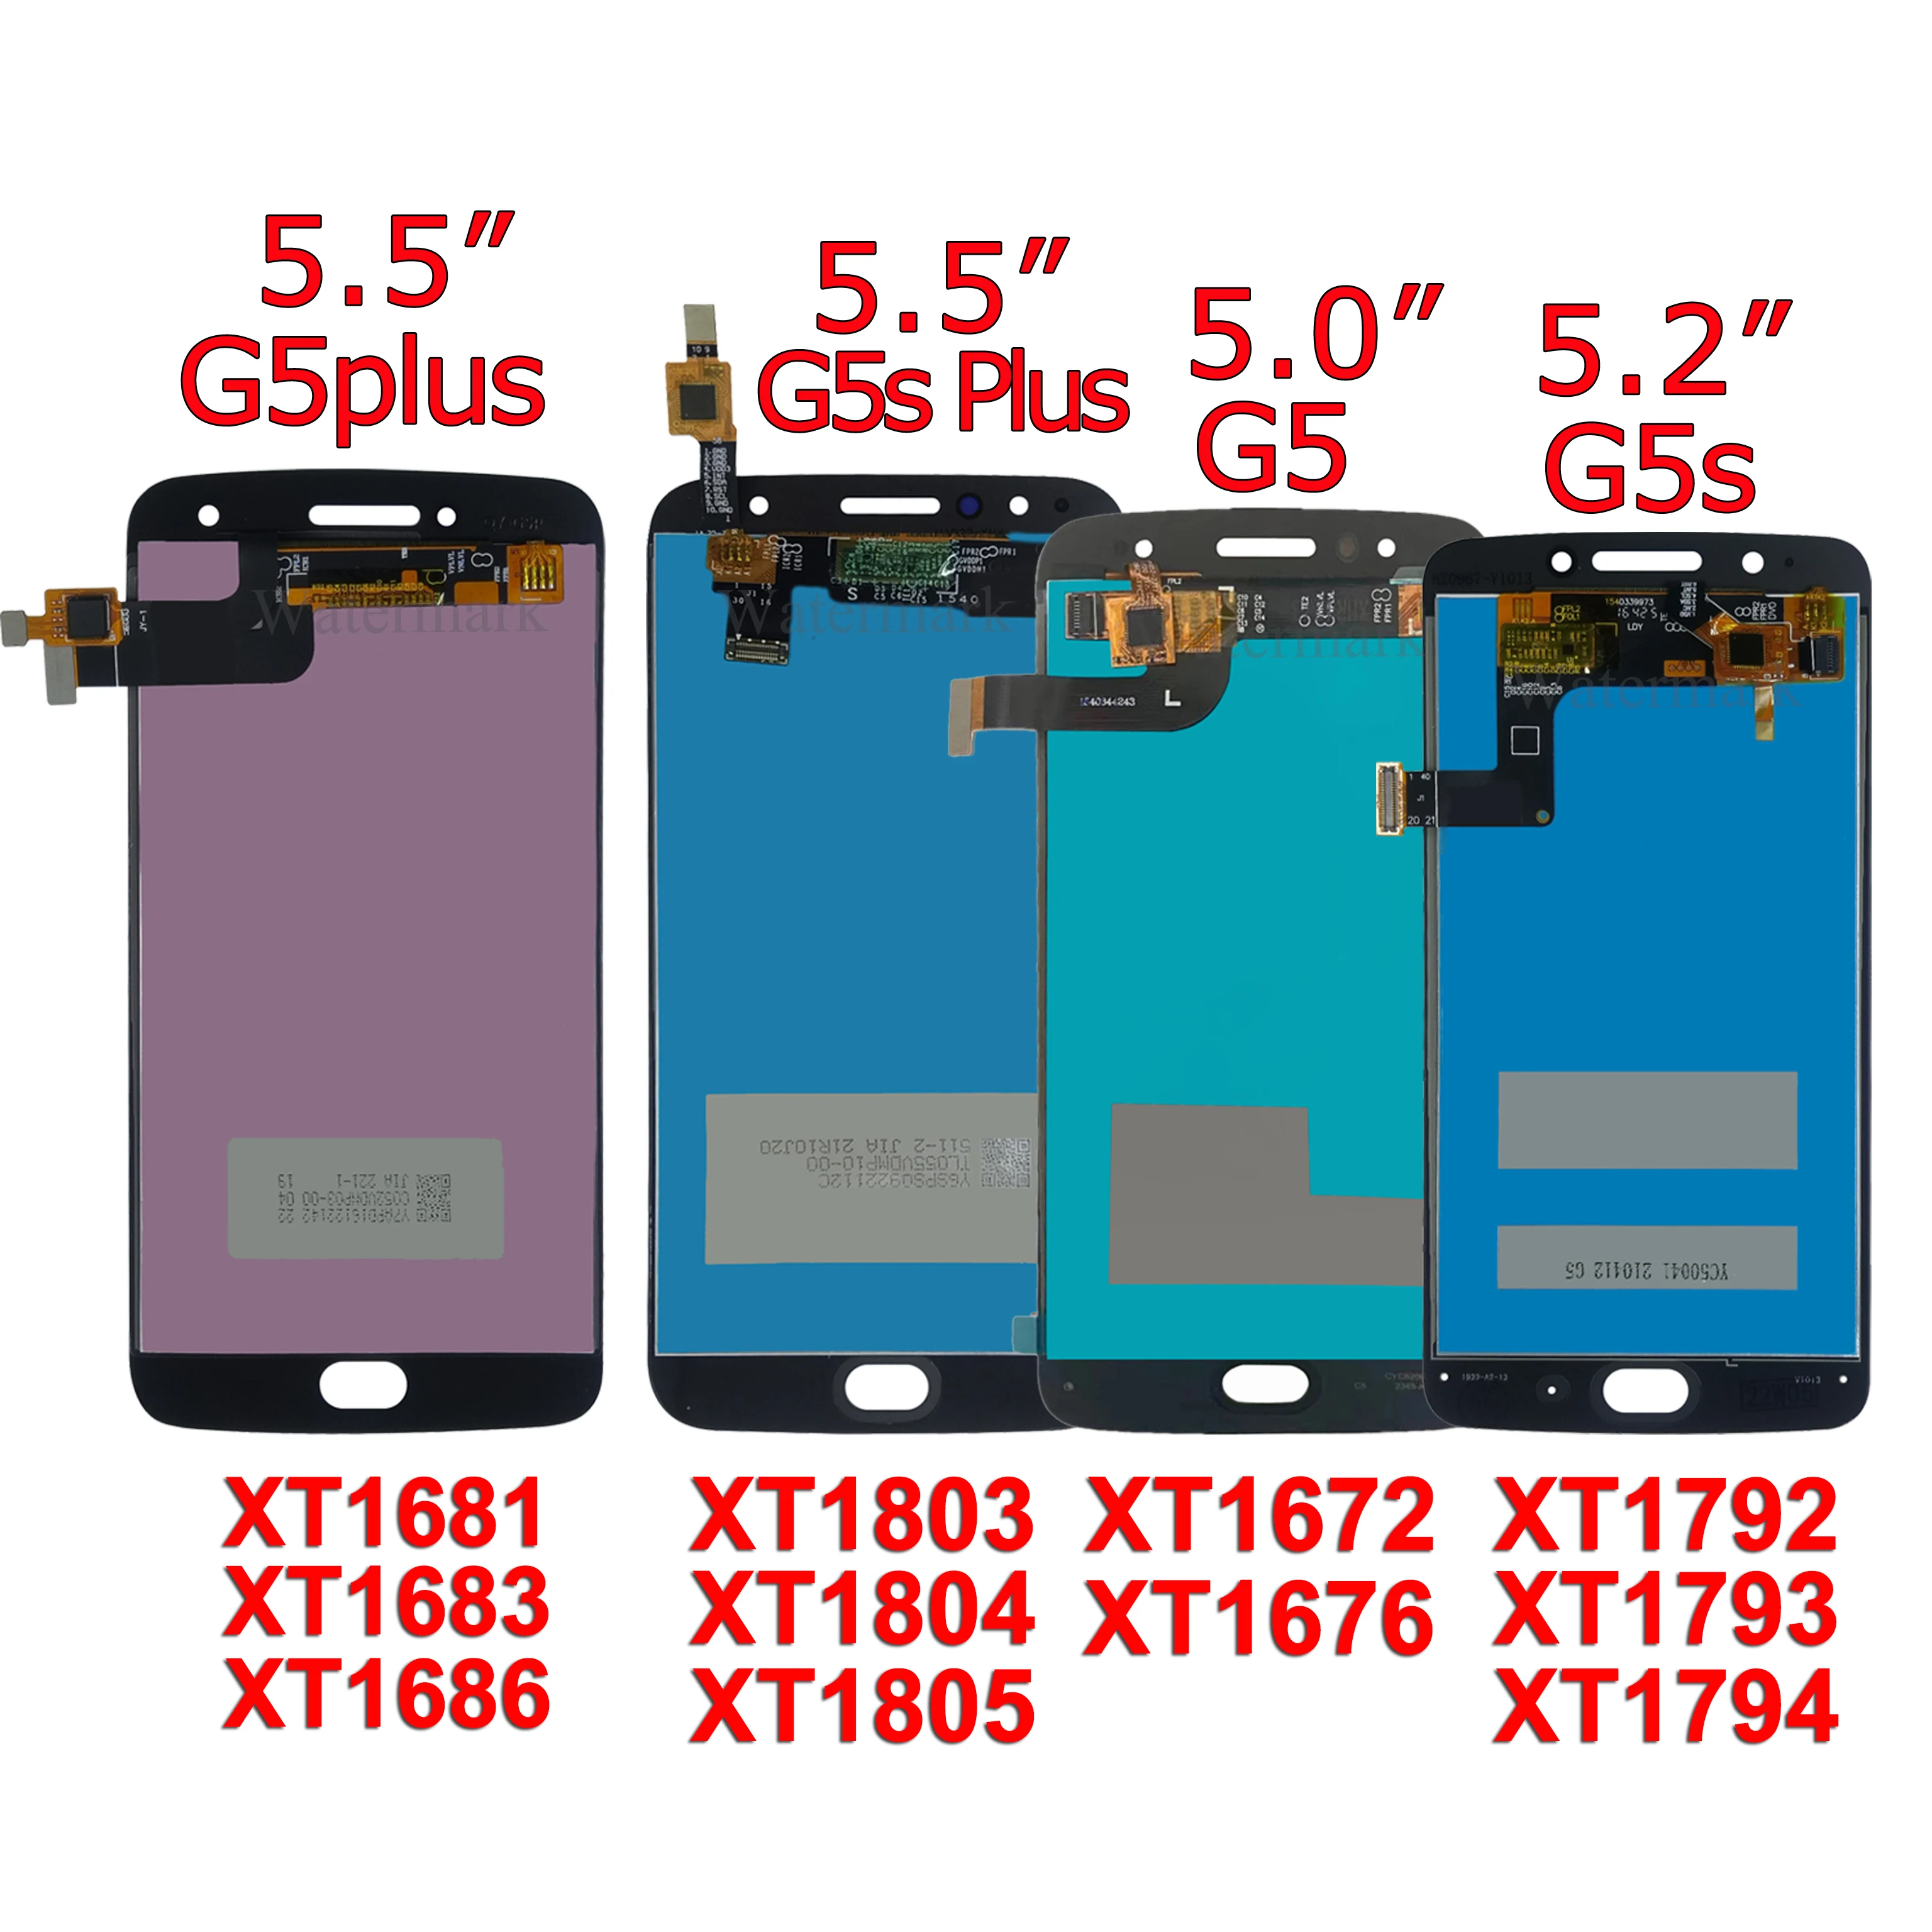 5 Piese/Lot Pentru Motorola MOTO G5 G5 Plus G5S G5S Plus XT1670 XT1685 XT1803 XT1792 Display LCD Touch Screen Digitizer Asamblare